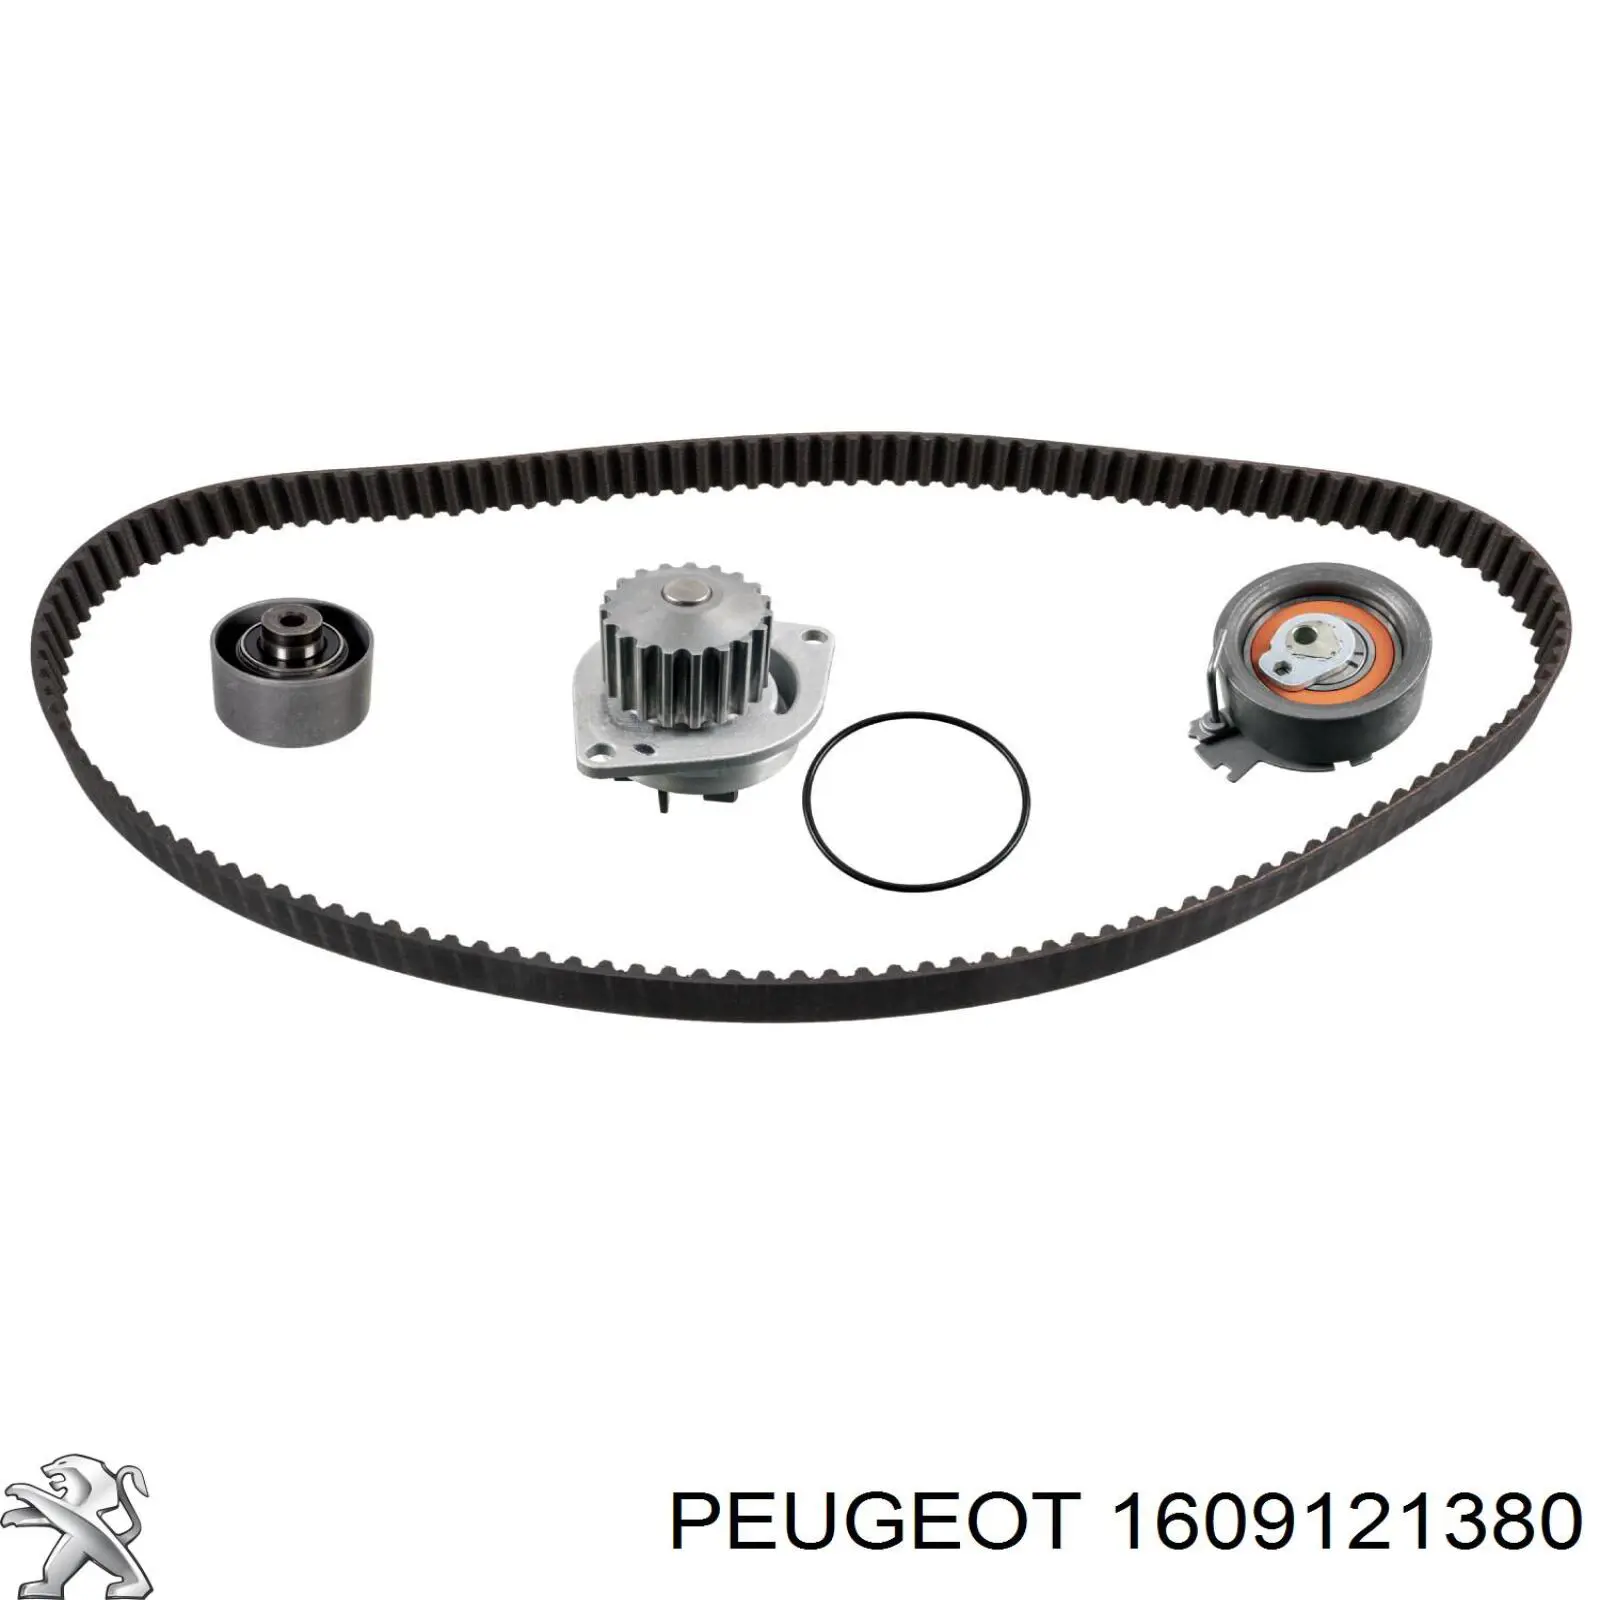 1609121380 Peugeot/Citroen kit de correa de distribución